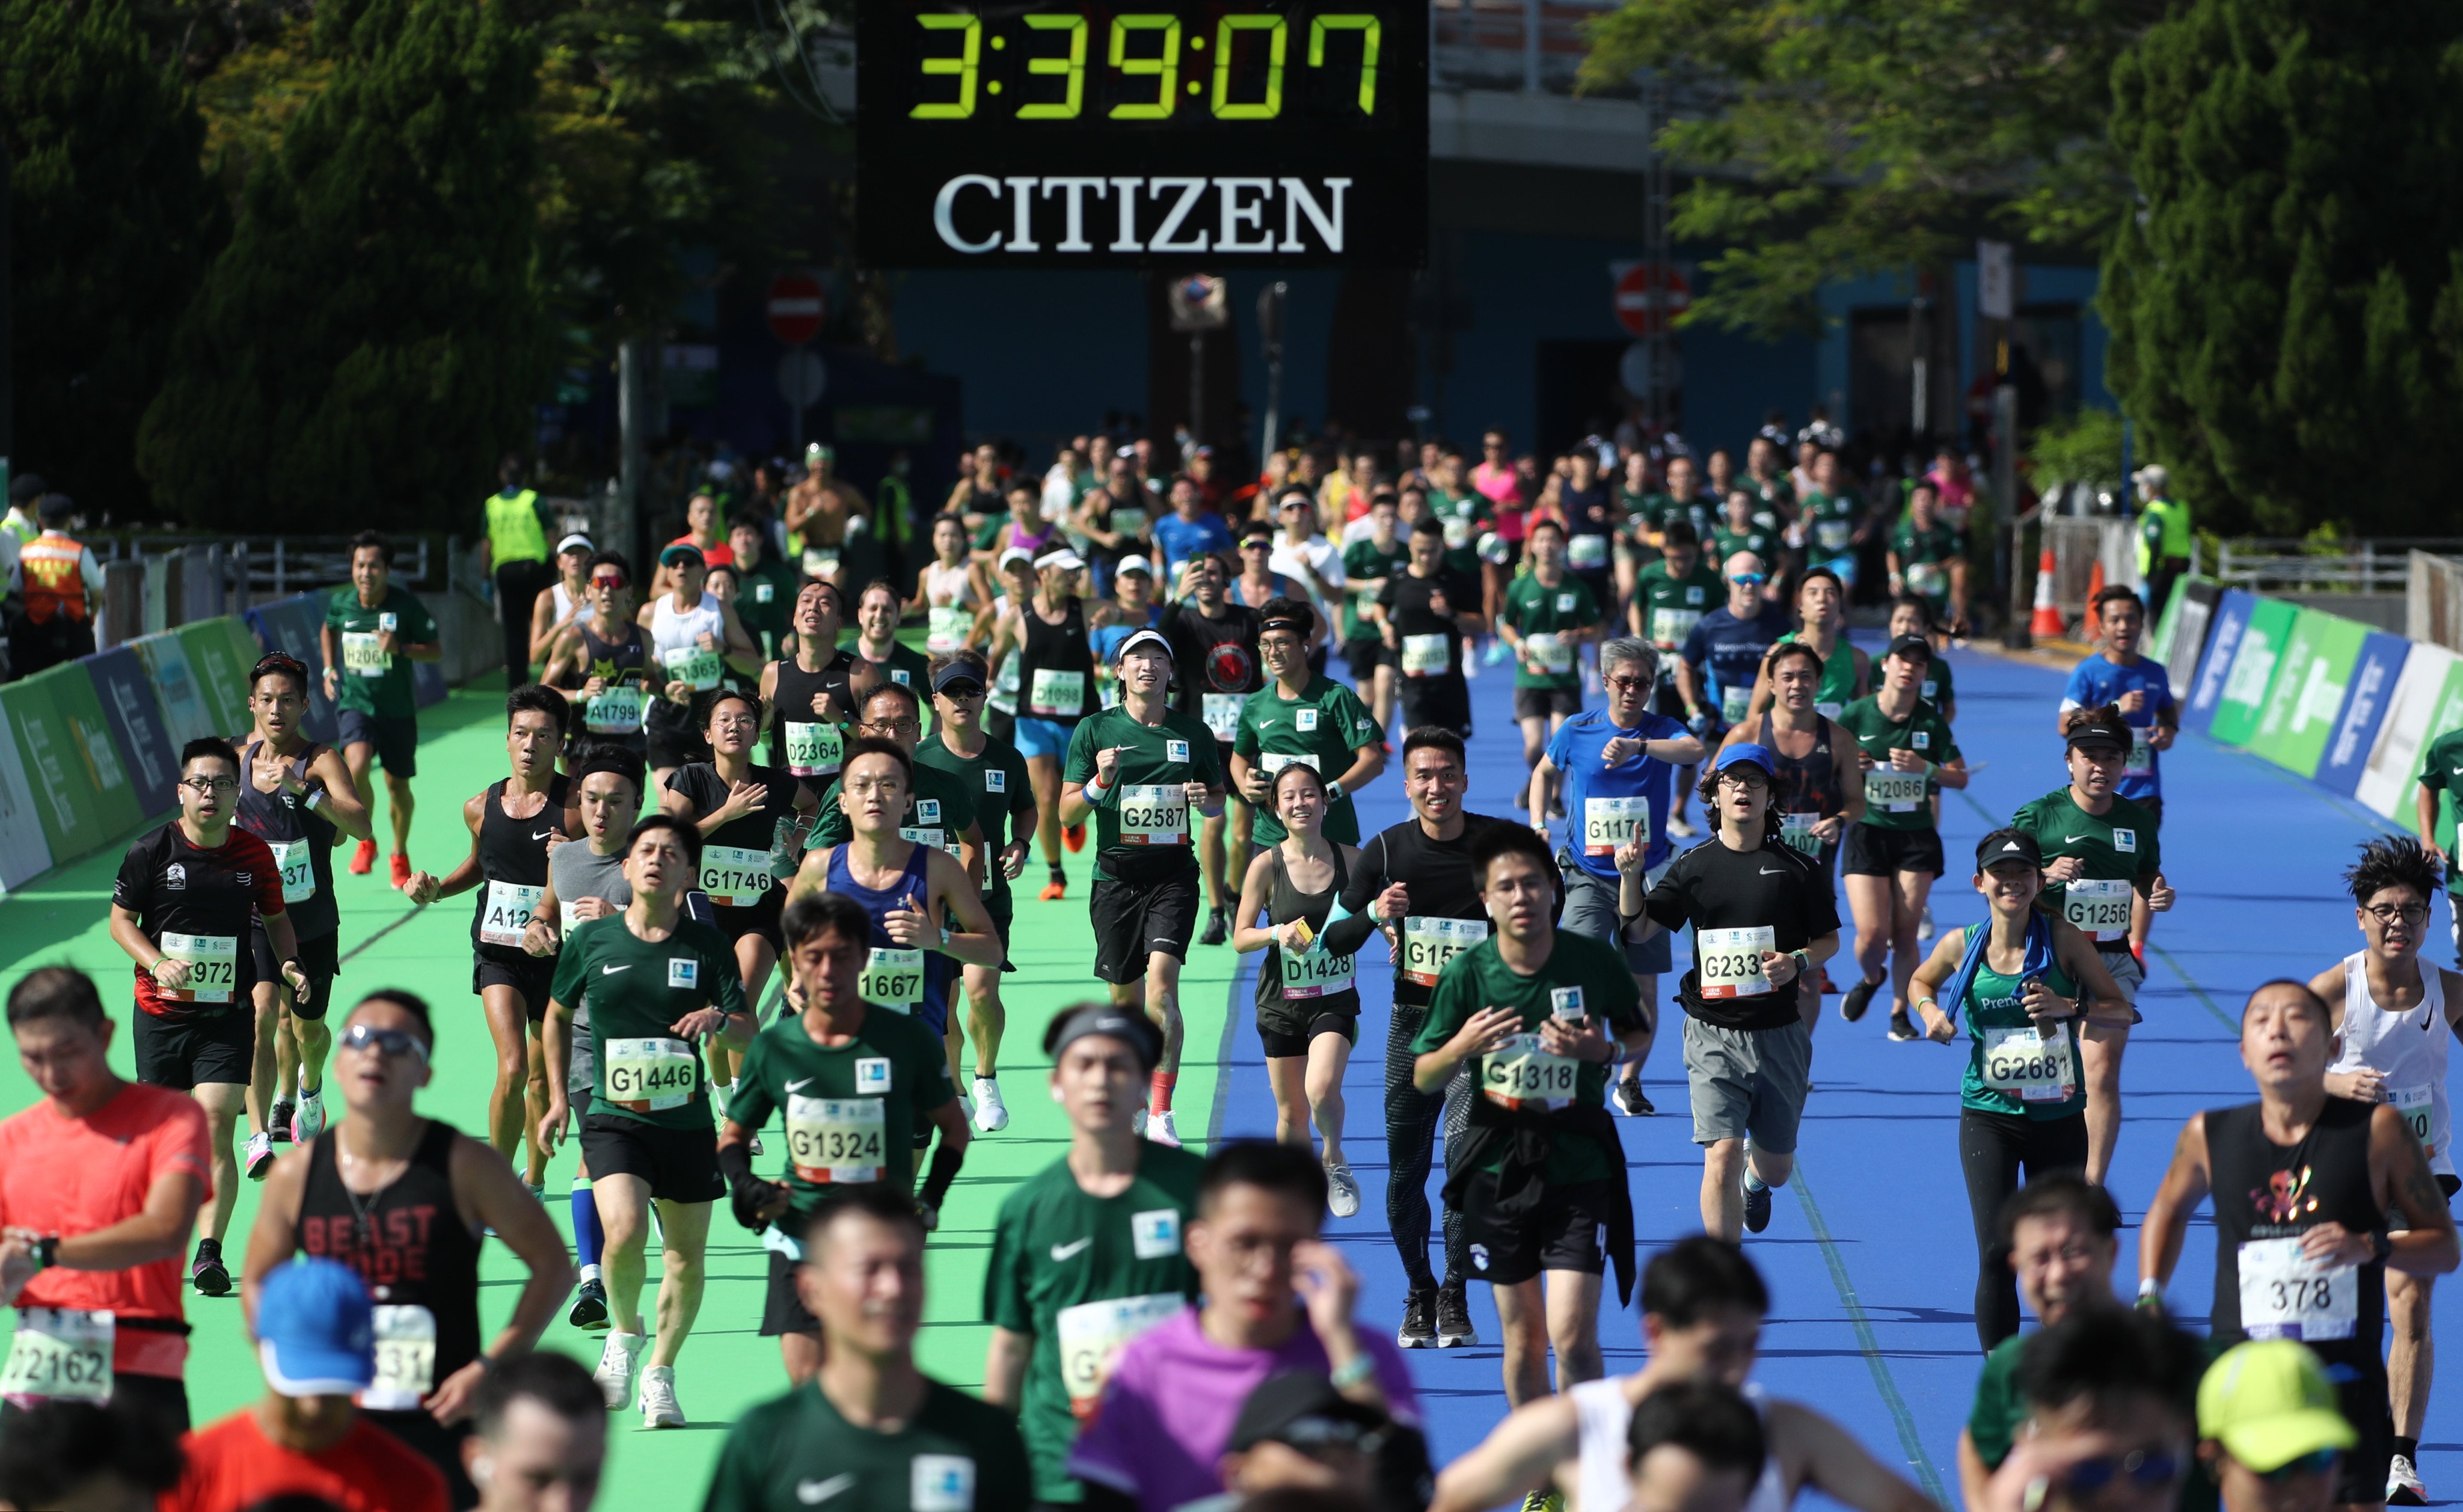 Runners arrive at Standard Chartered Hong Kong Marathon 2021 finish line at Victoria Park, Causeway Bay. Photo: Nora Tam